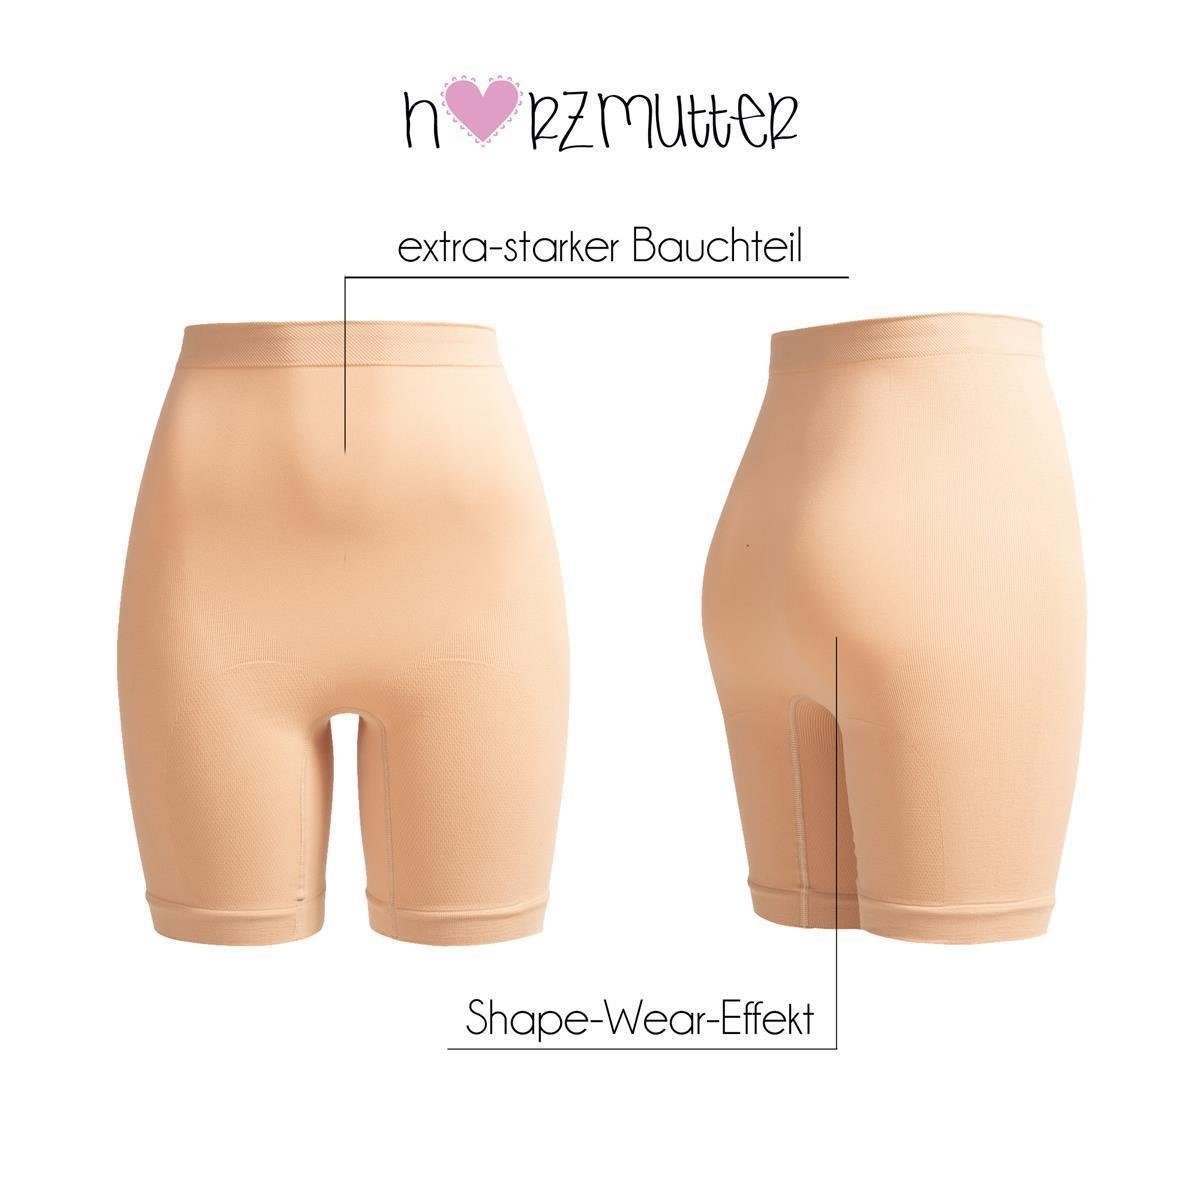 Shapingpants Shorts Damen Shaping Herzmutter - Schwarz/Beige Shapewear Unterwäsche 2-St) (Packung,